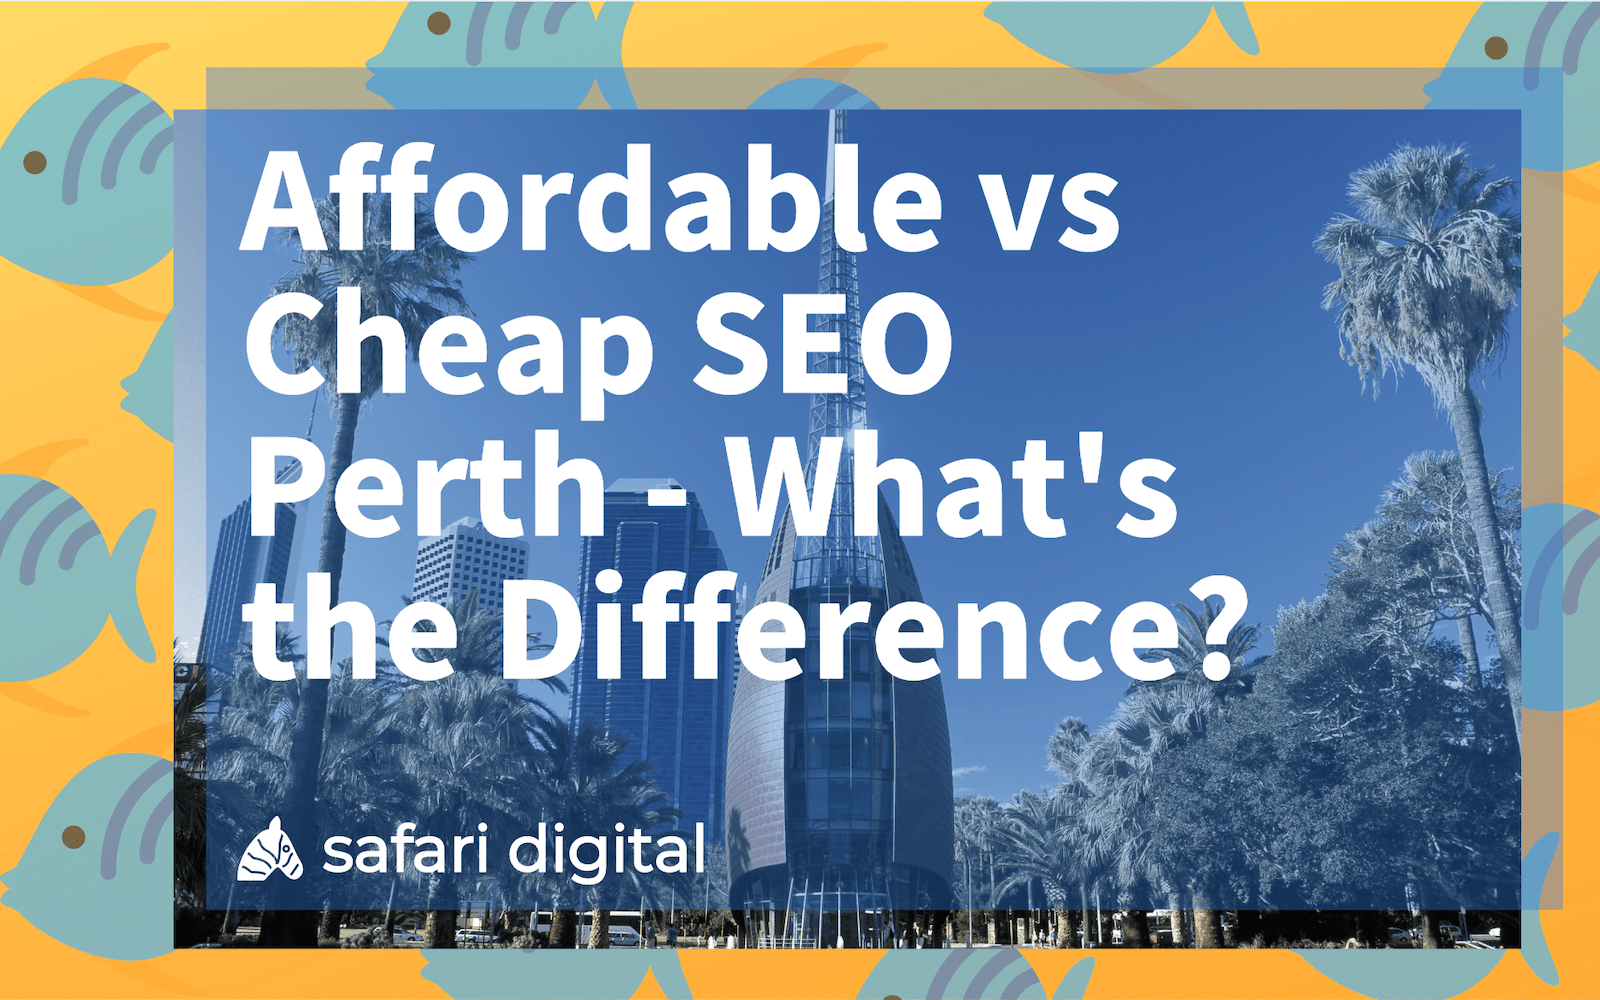 Cheap SEO Perth vs. Affordable SEO Parth - large cover image